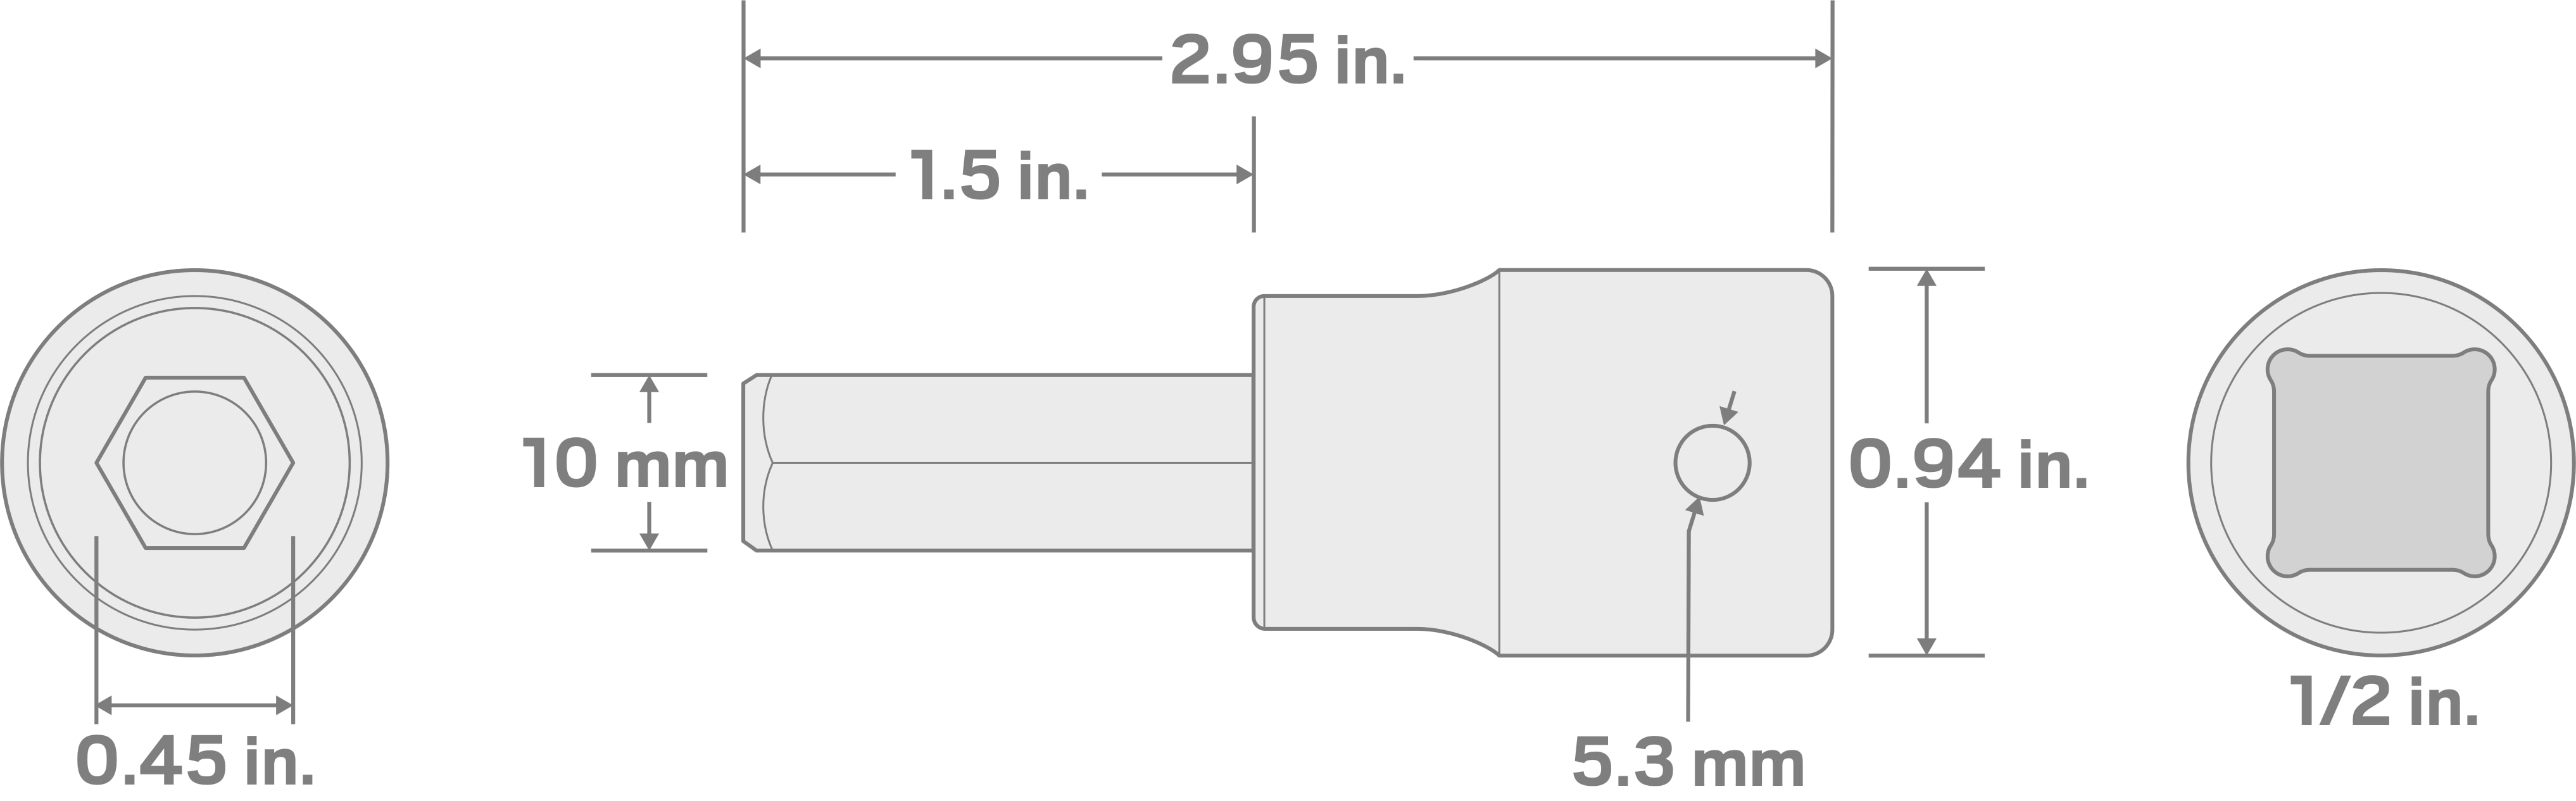 Specs for 1/2 Inch Drive x 10 mm Hex Impact Bit Socket